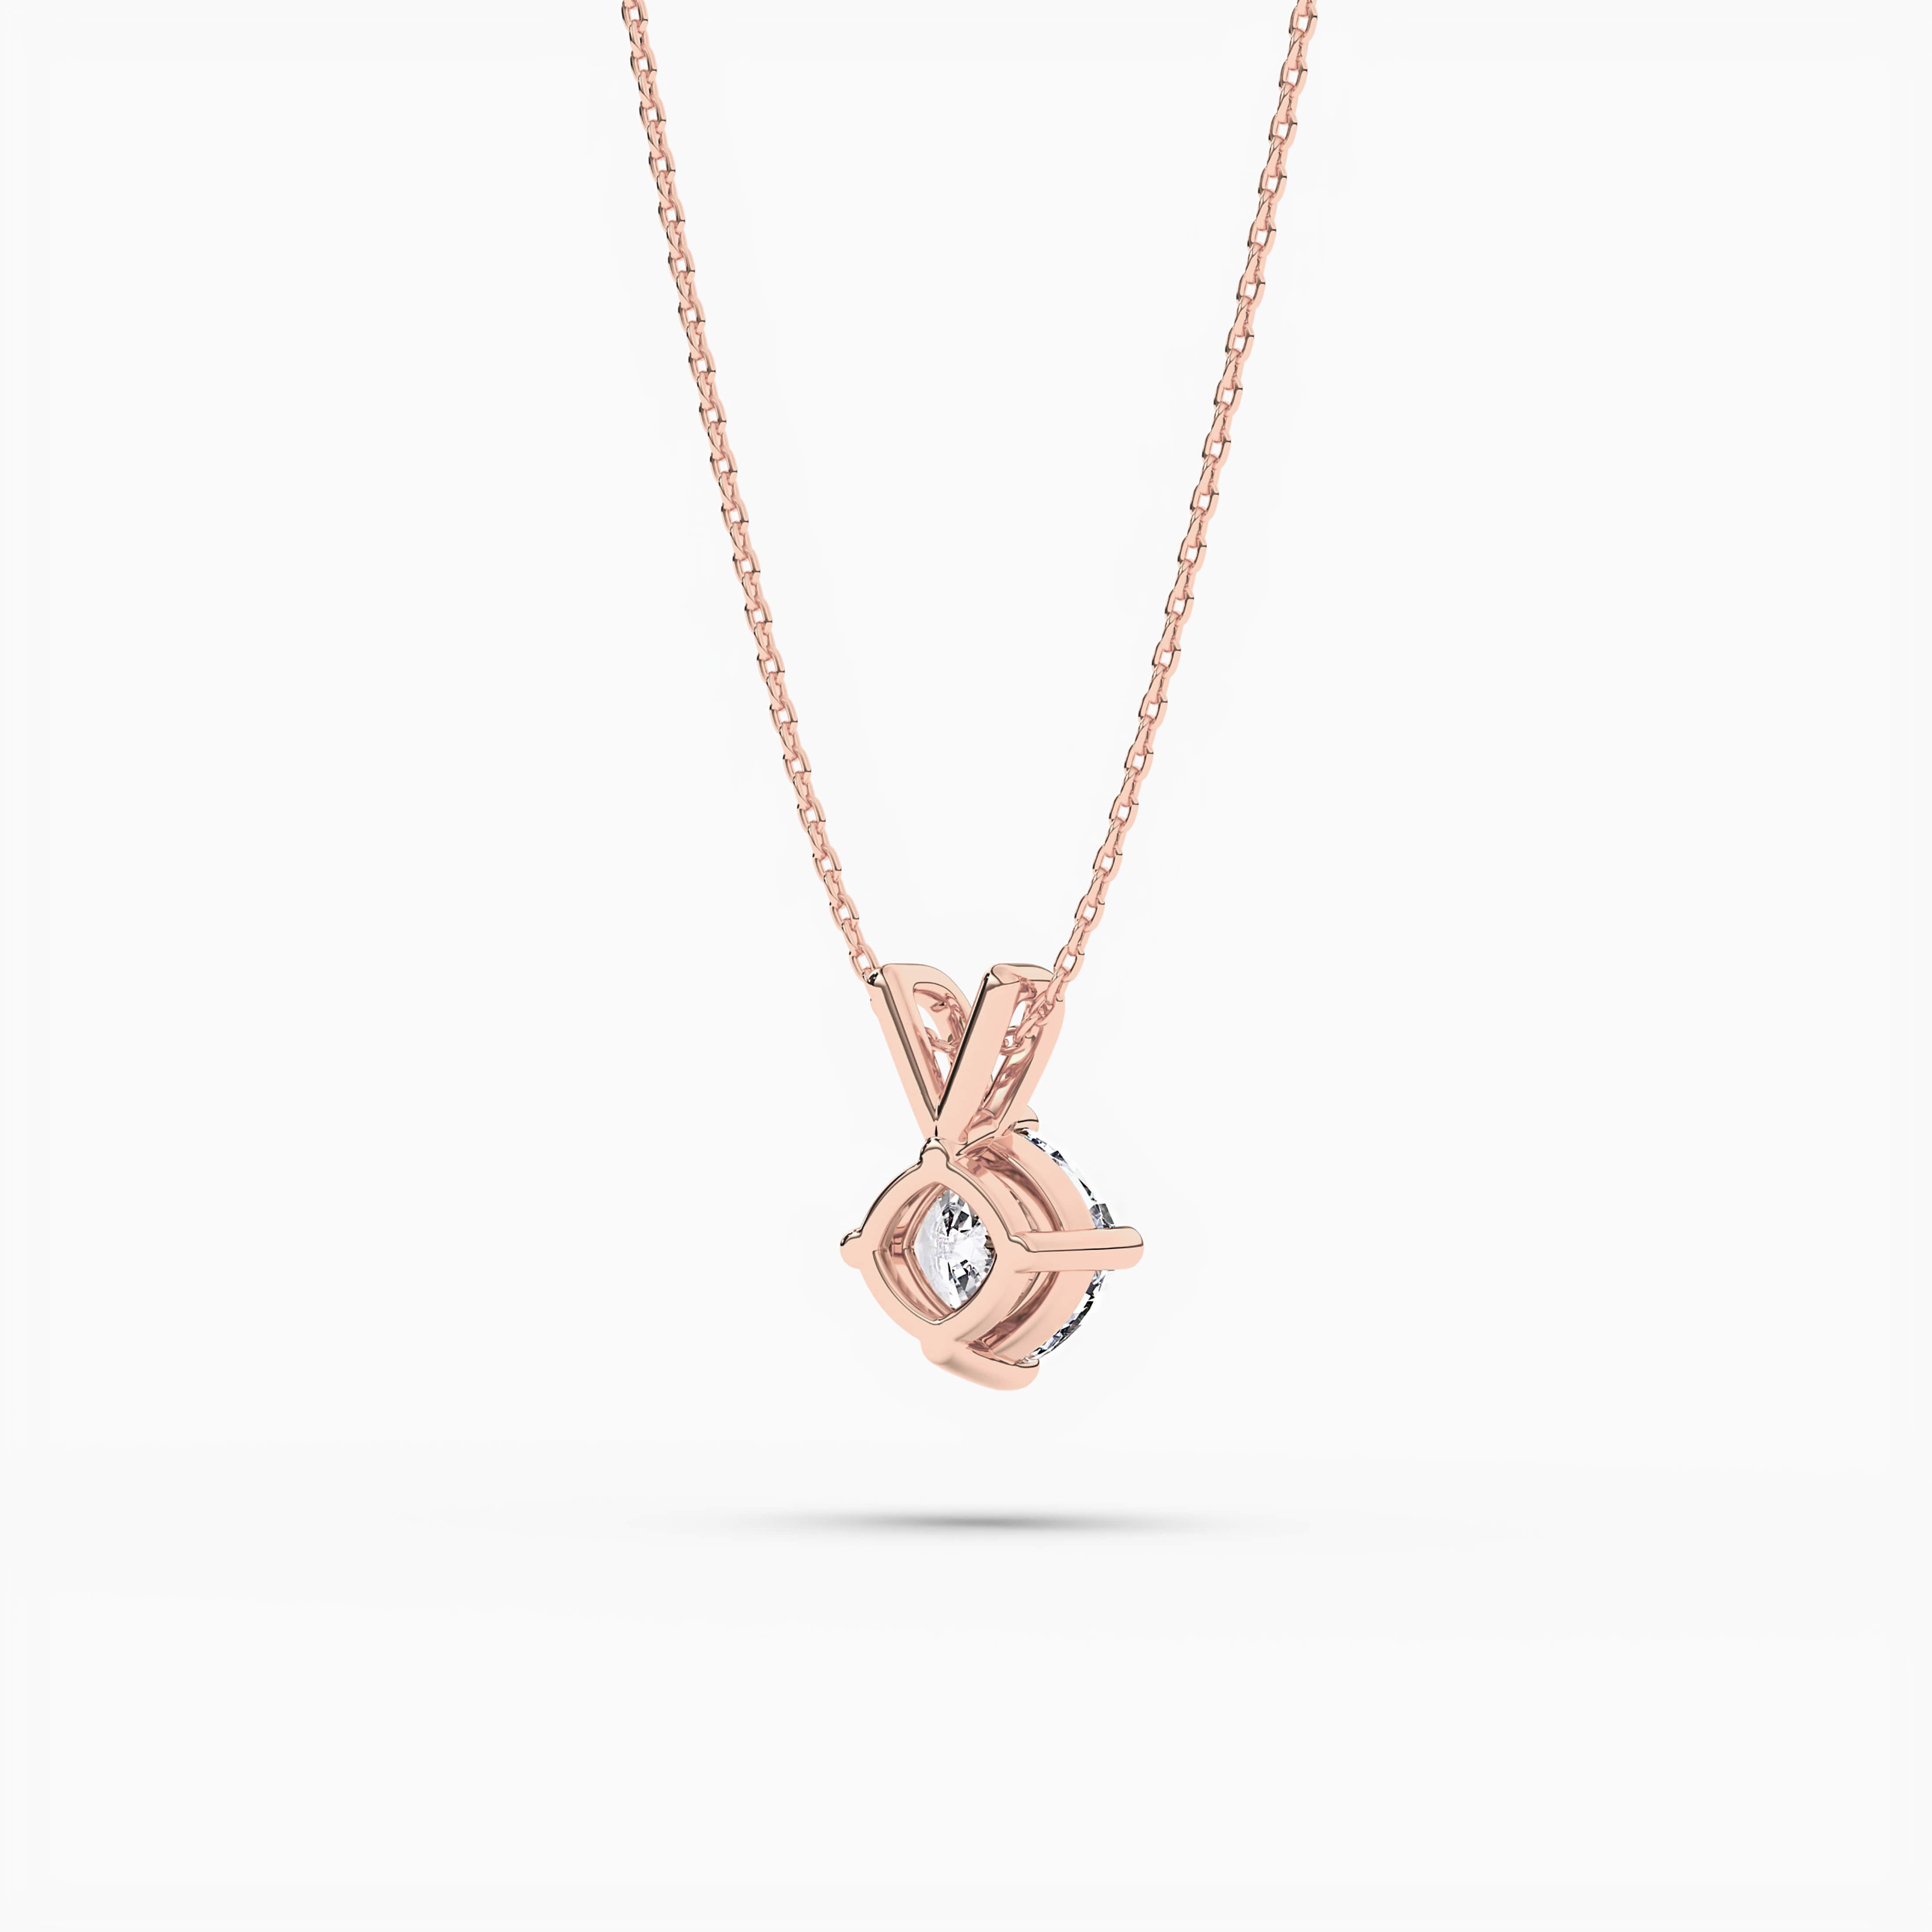 4 Prong Basket Cushion Cut Solitaire Diamond Pendant Necklace Rose Gold